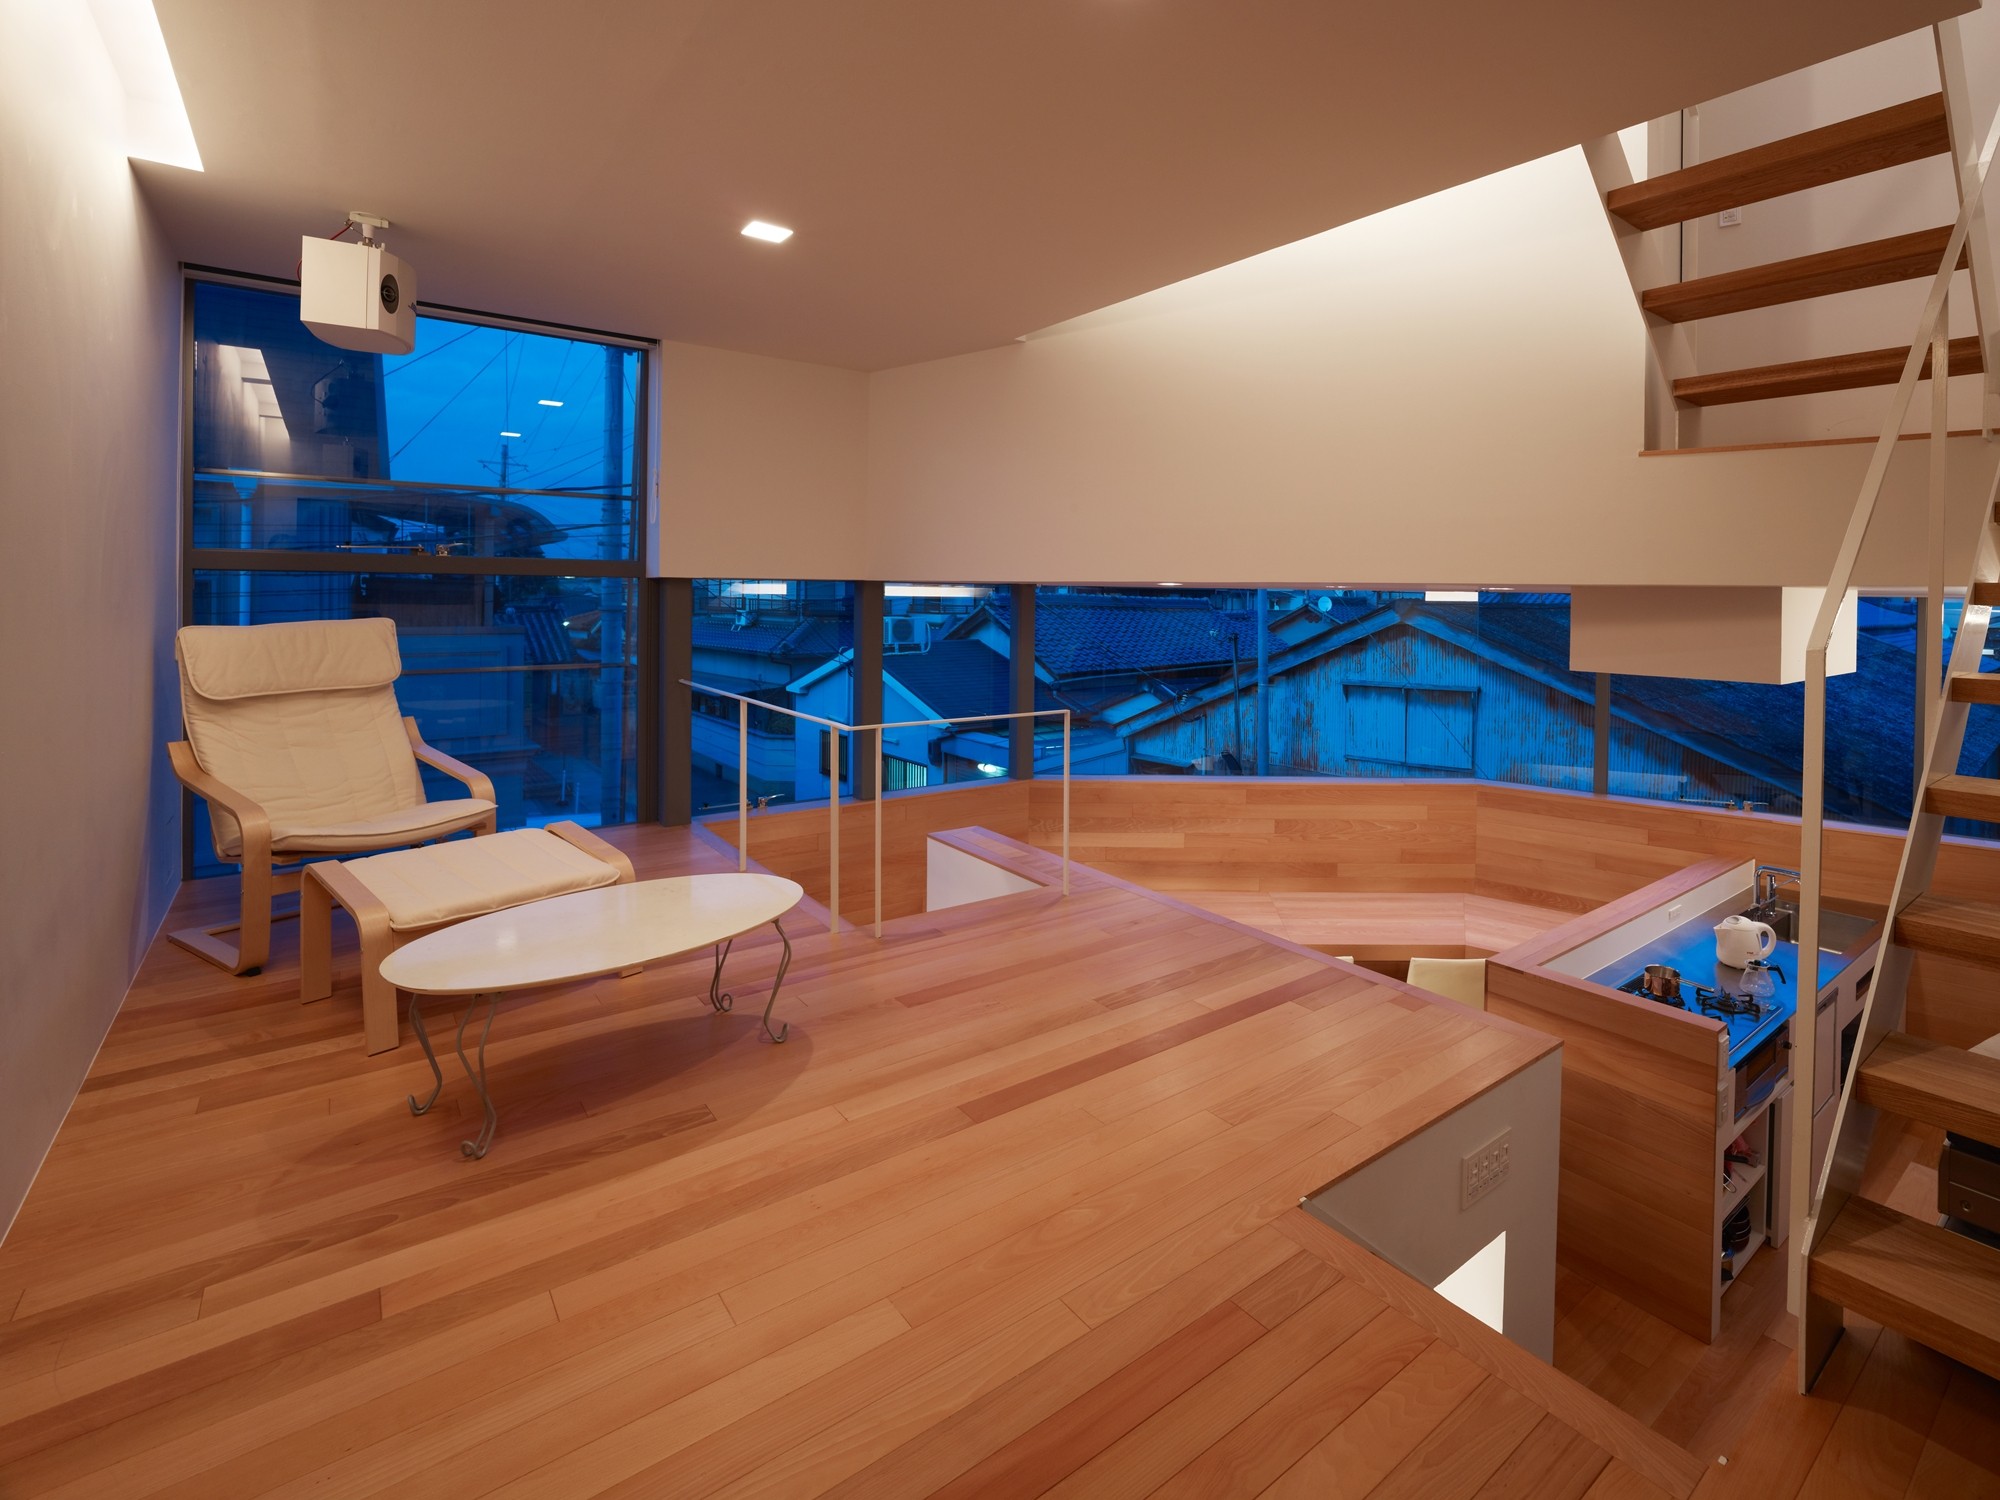 Photo Gallery: Model of Modern Wooden Minimalist Home Design